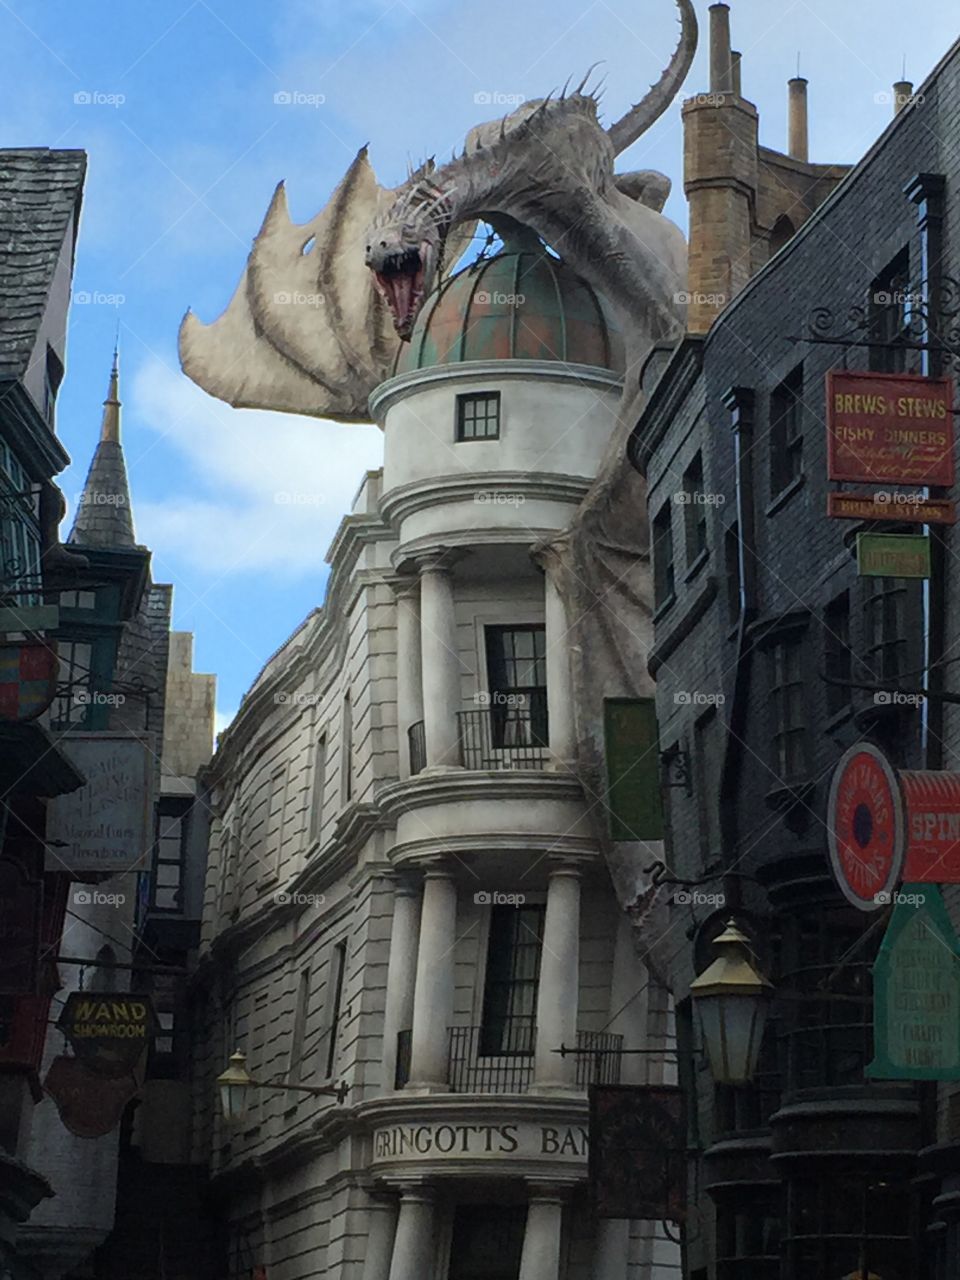 Harry Potter World in Universal Orlando Studios